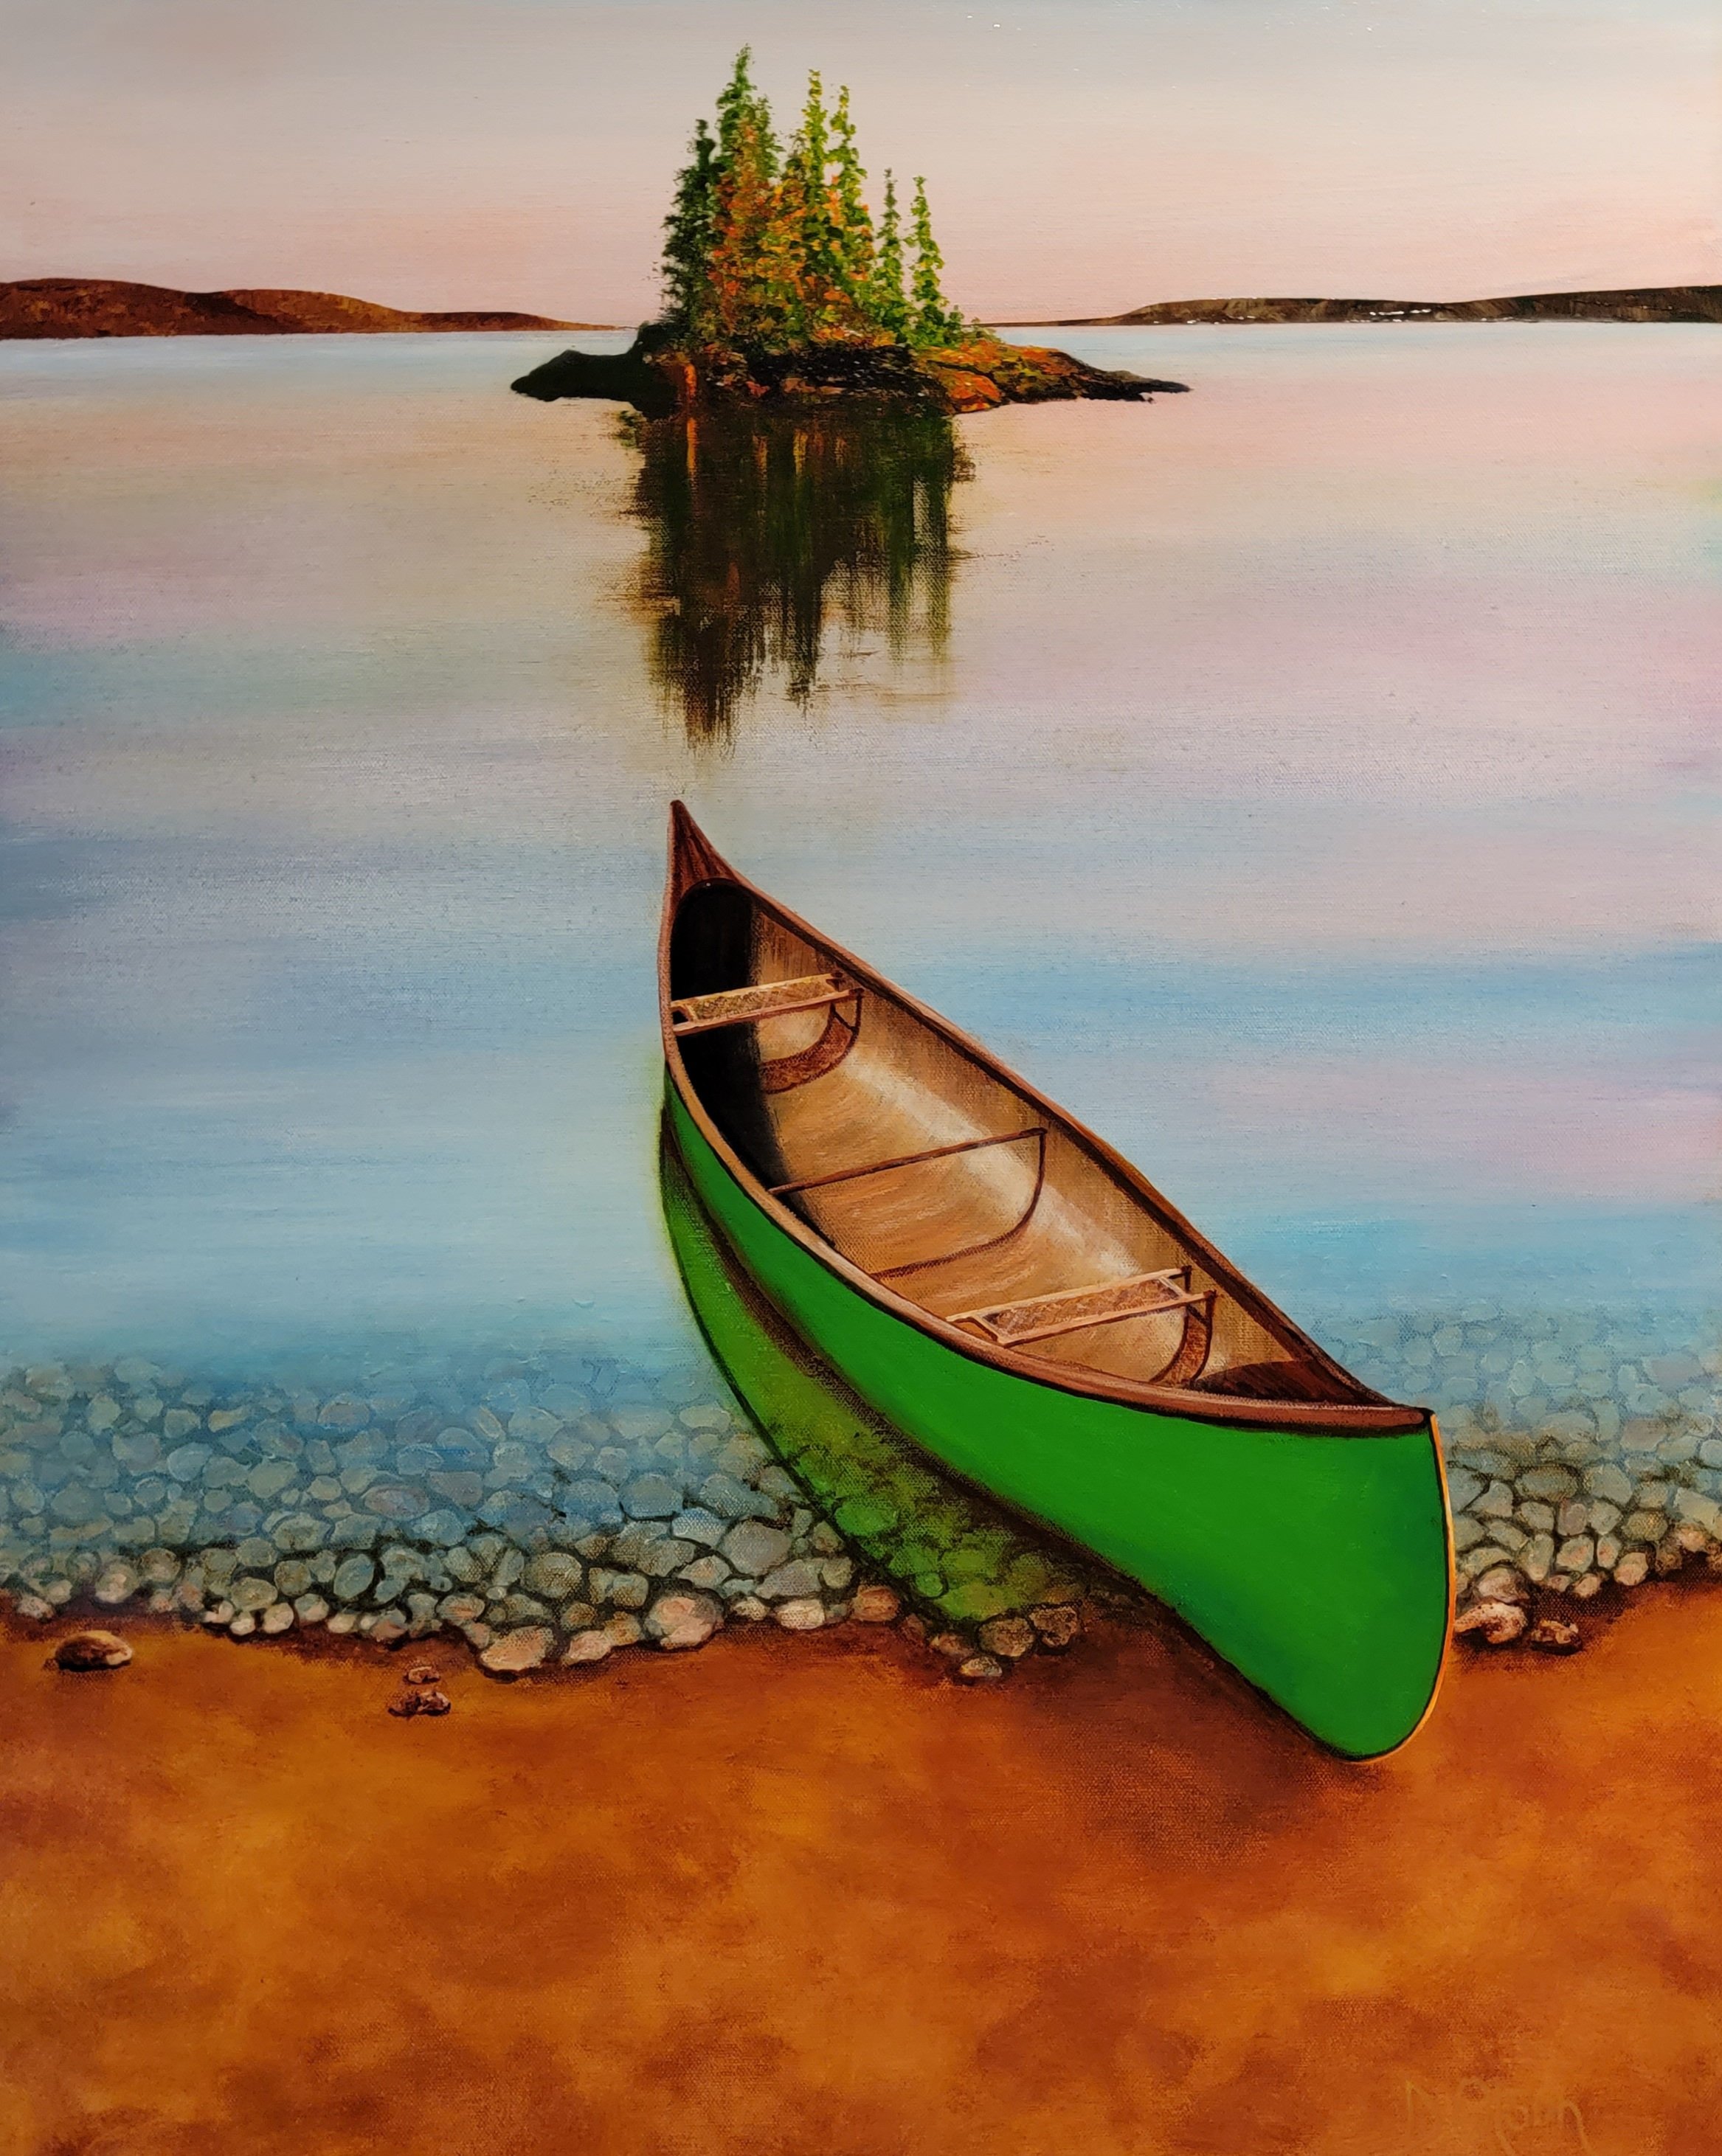 Derek Olson, "Sunset Beach", acrylic on canvas, 30x24", 2021, $3,300